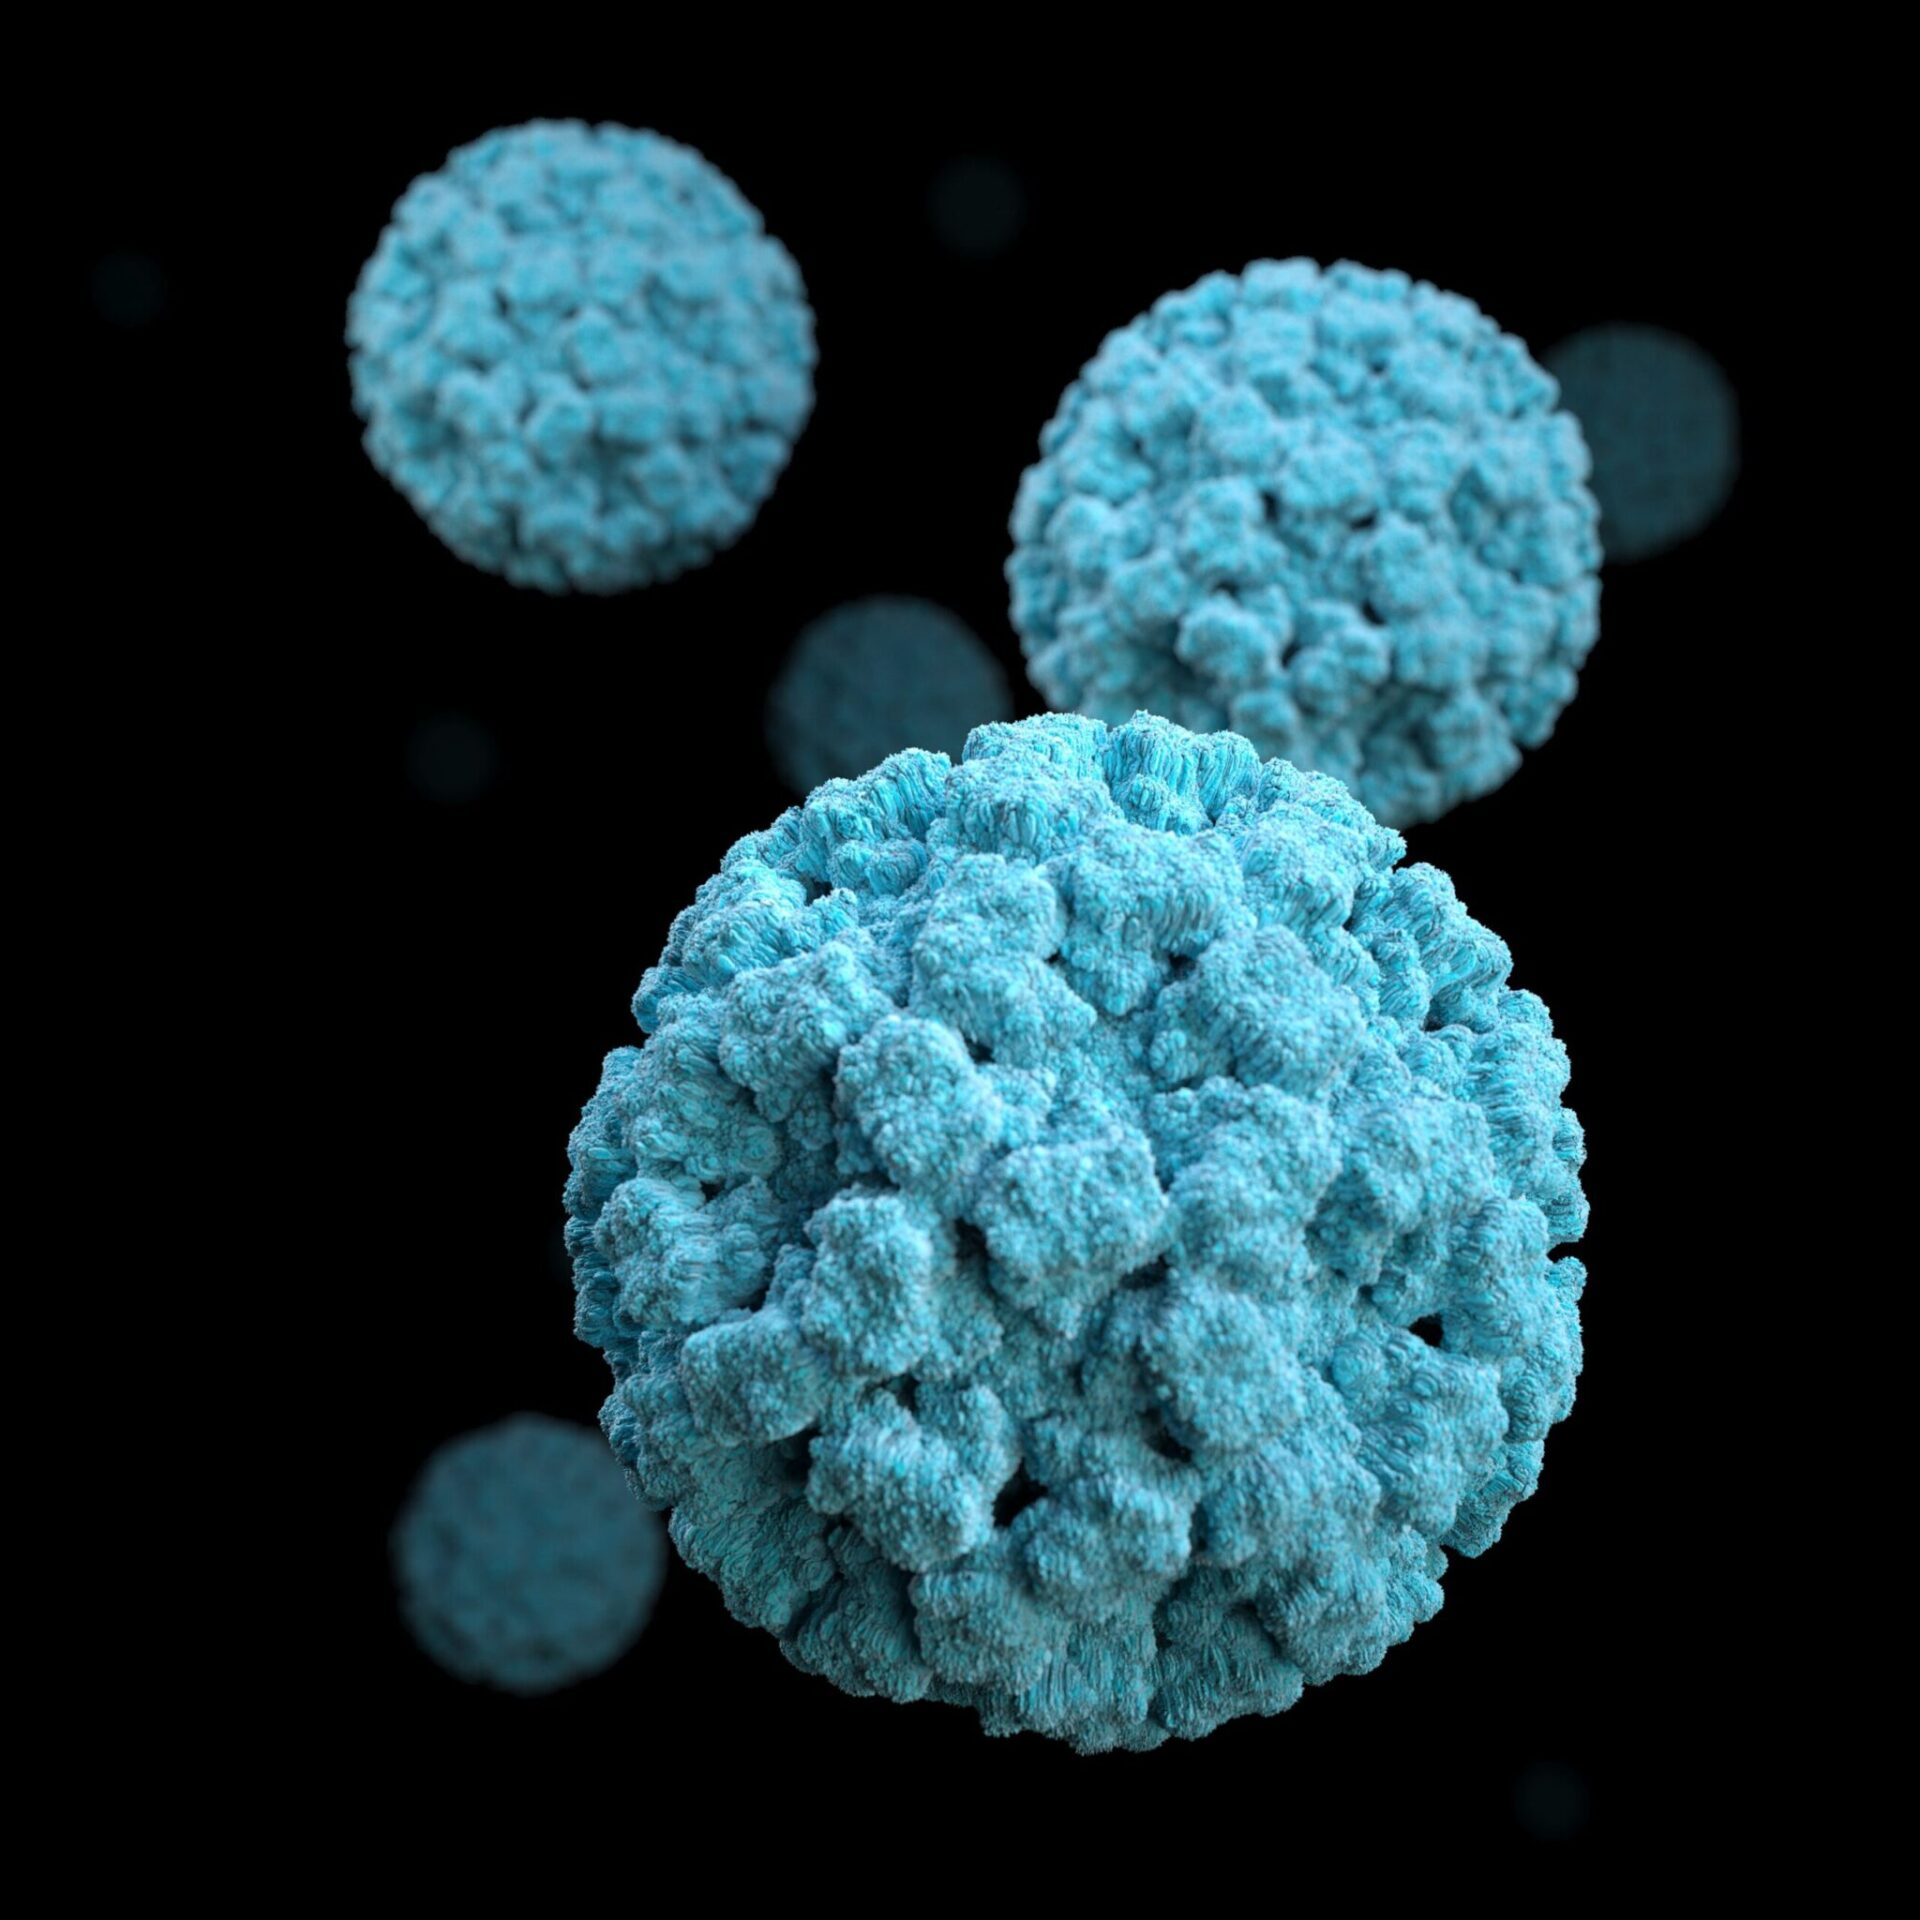 3D Rendering of blue virus particles (Norovirus)